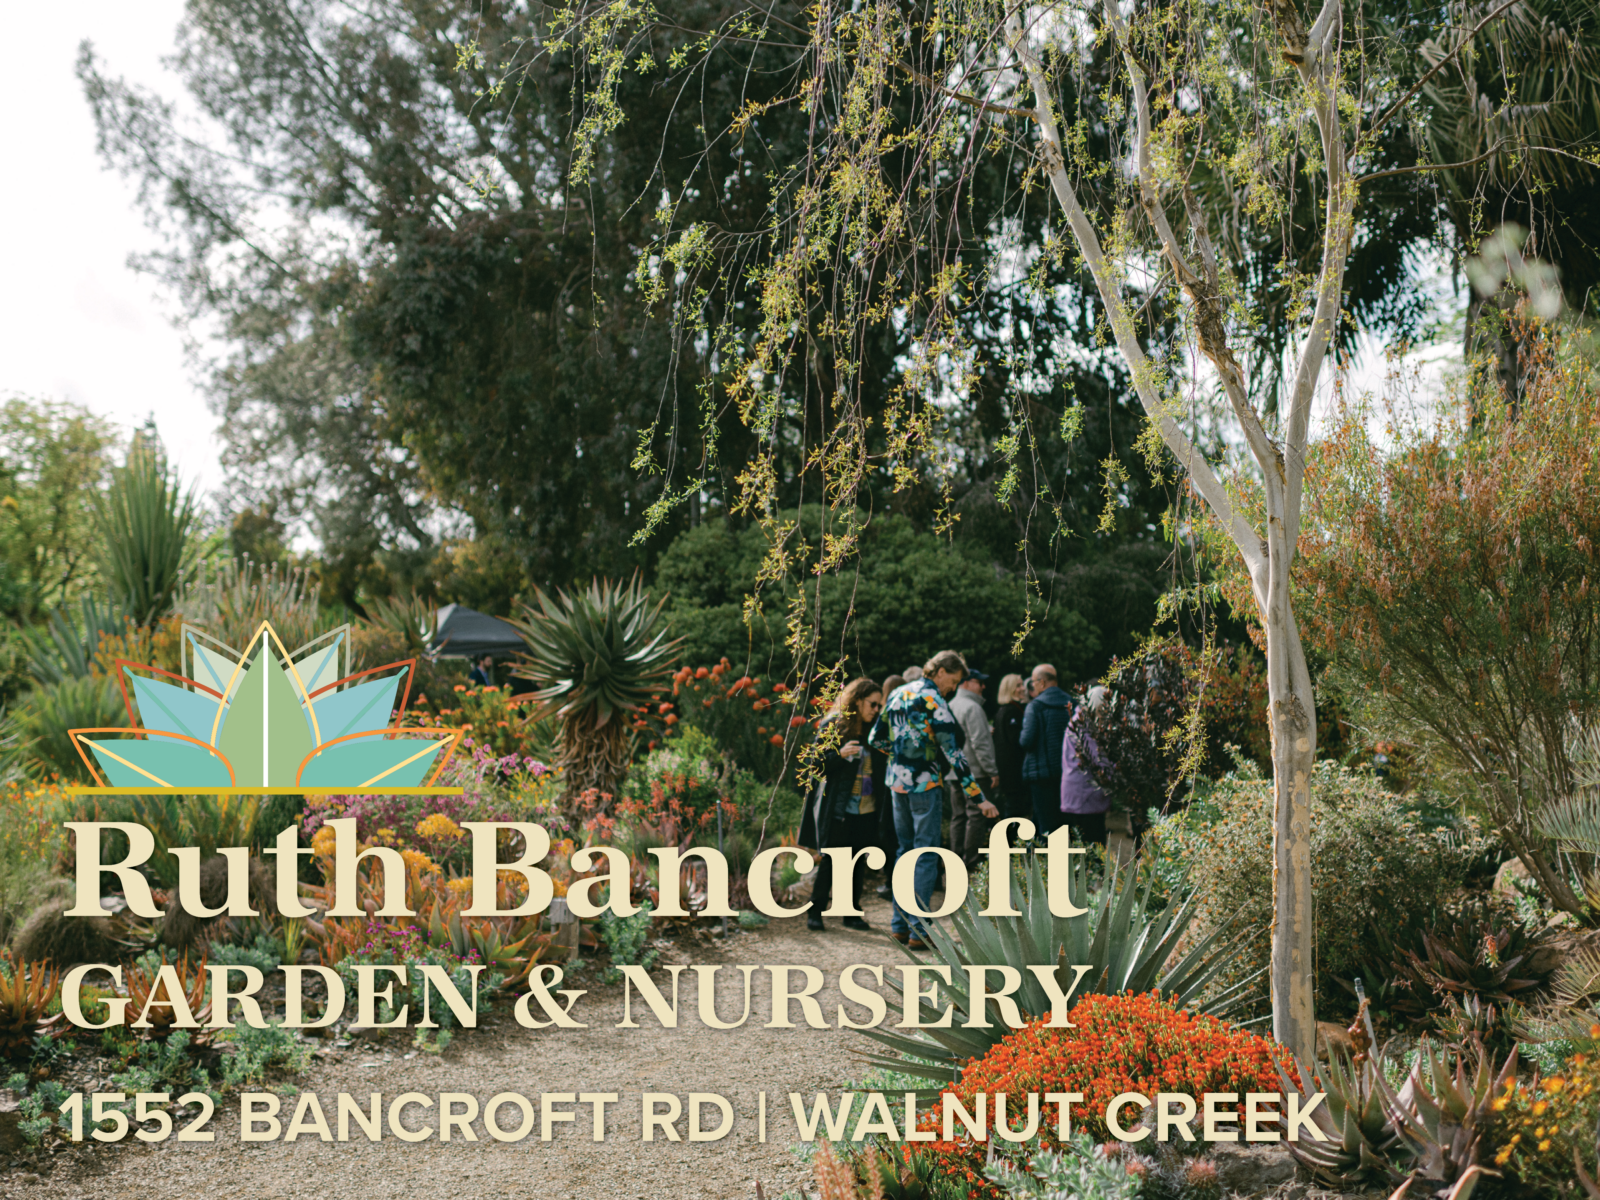 Ruth Bancroft Garden and Nursery, in Walnut Creek